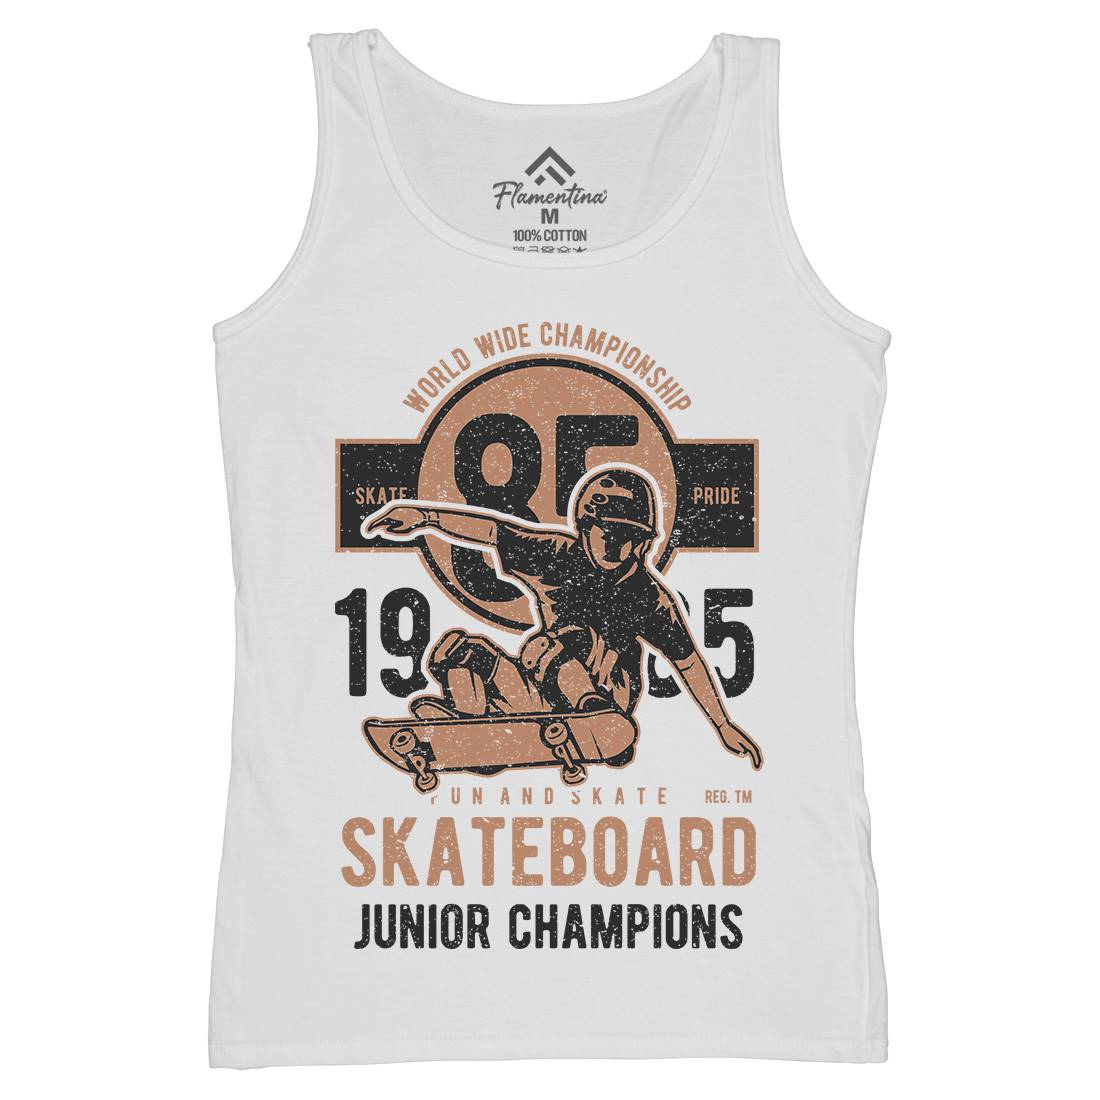 Skateboard Junior Champions Womens Organic Tank Top Vest Skate A755